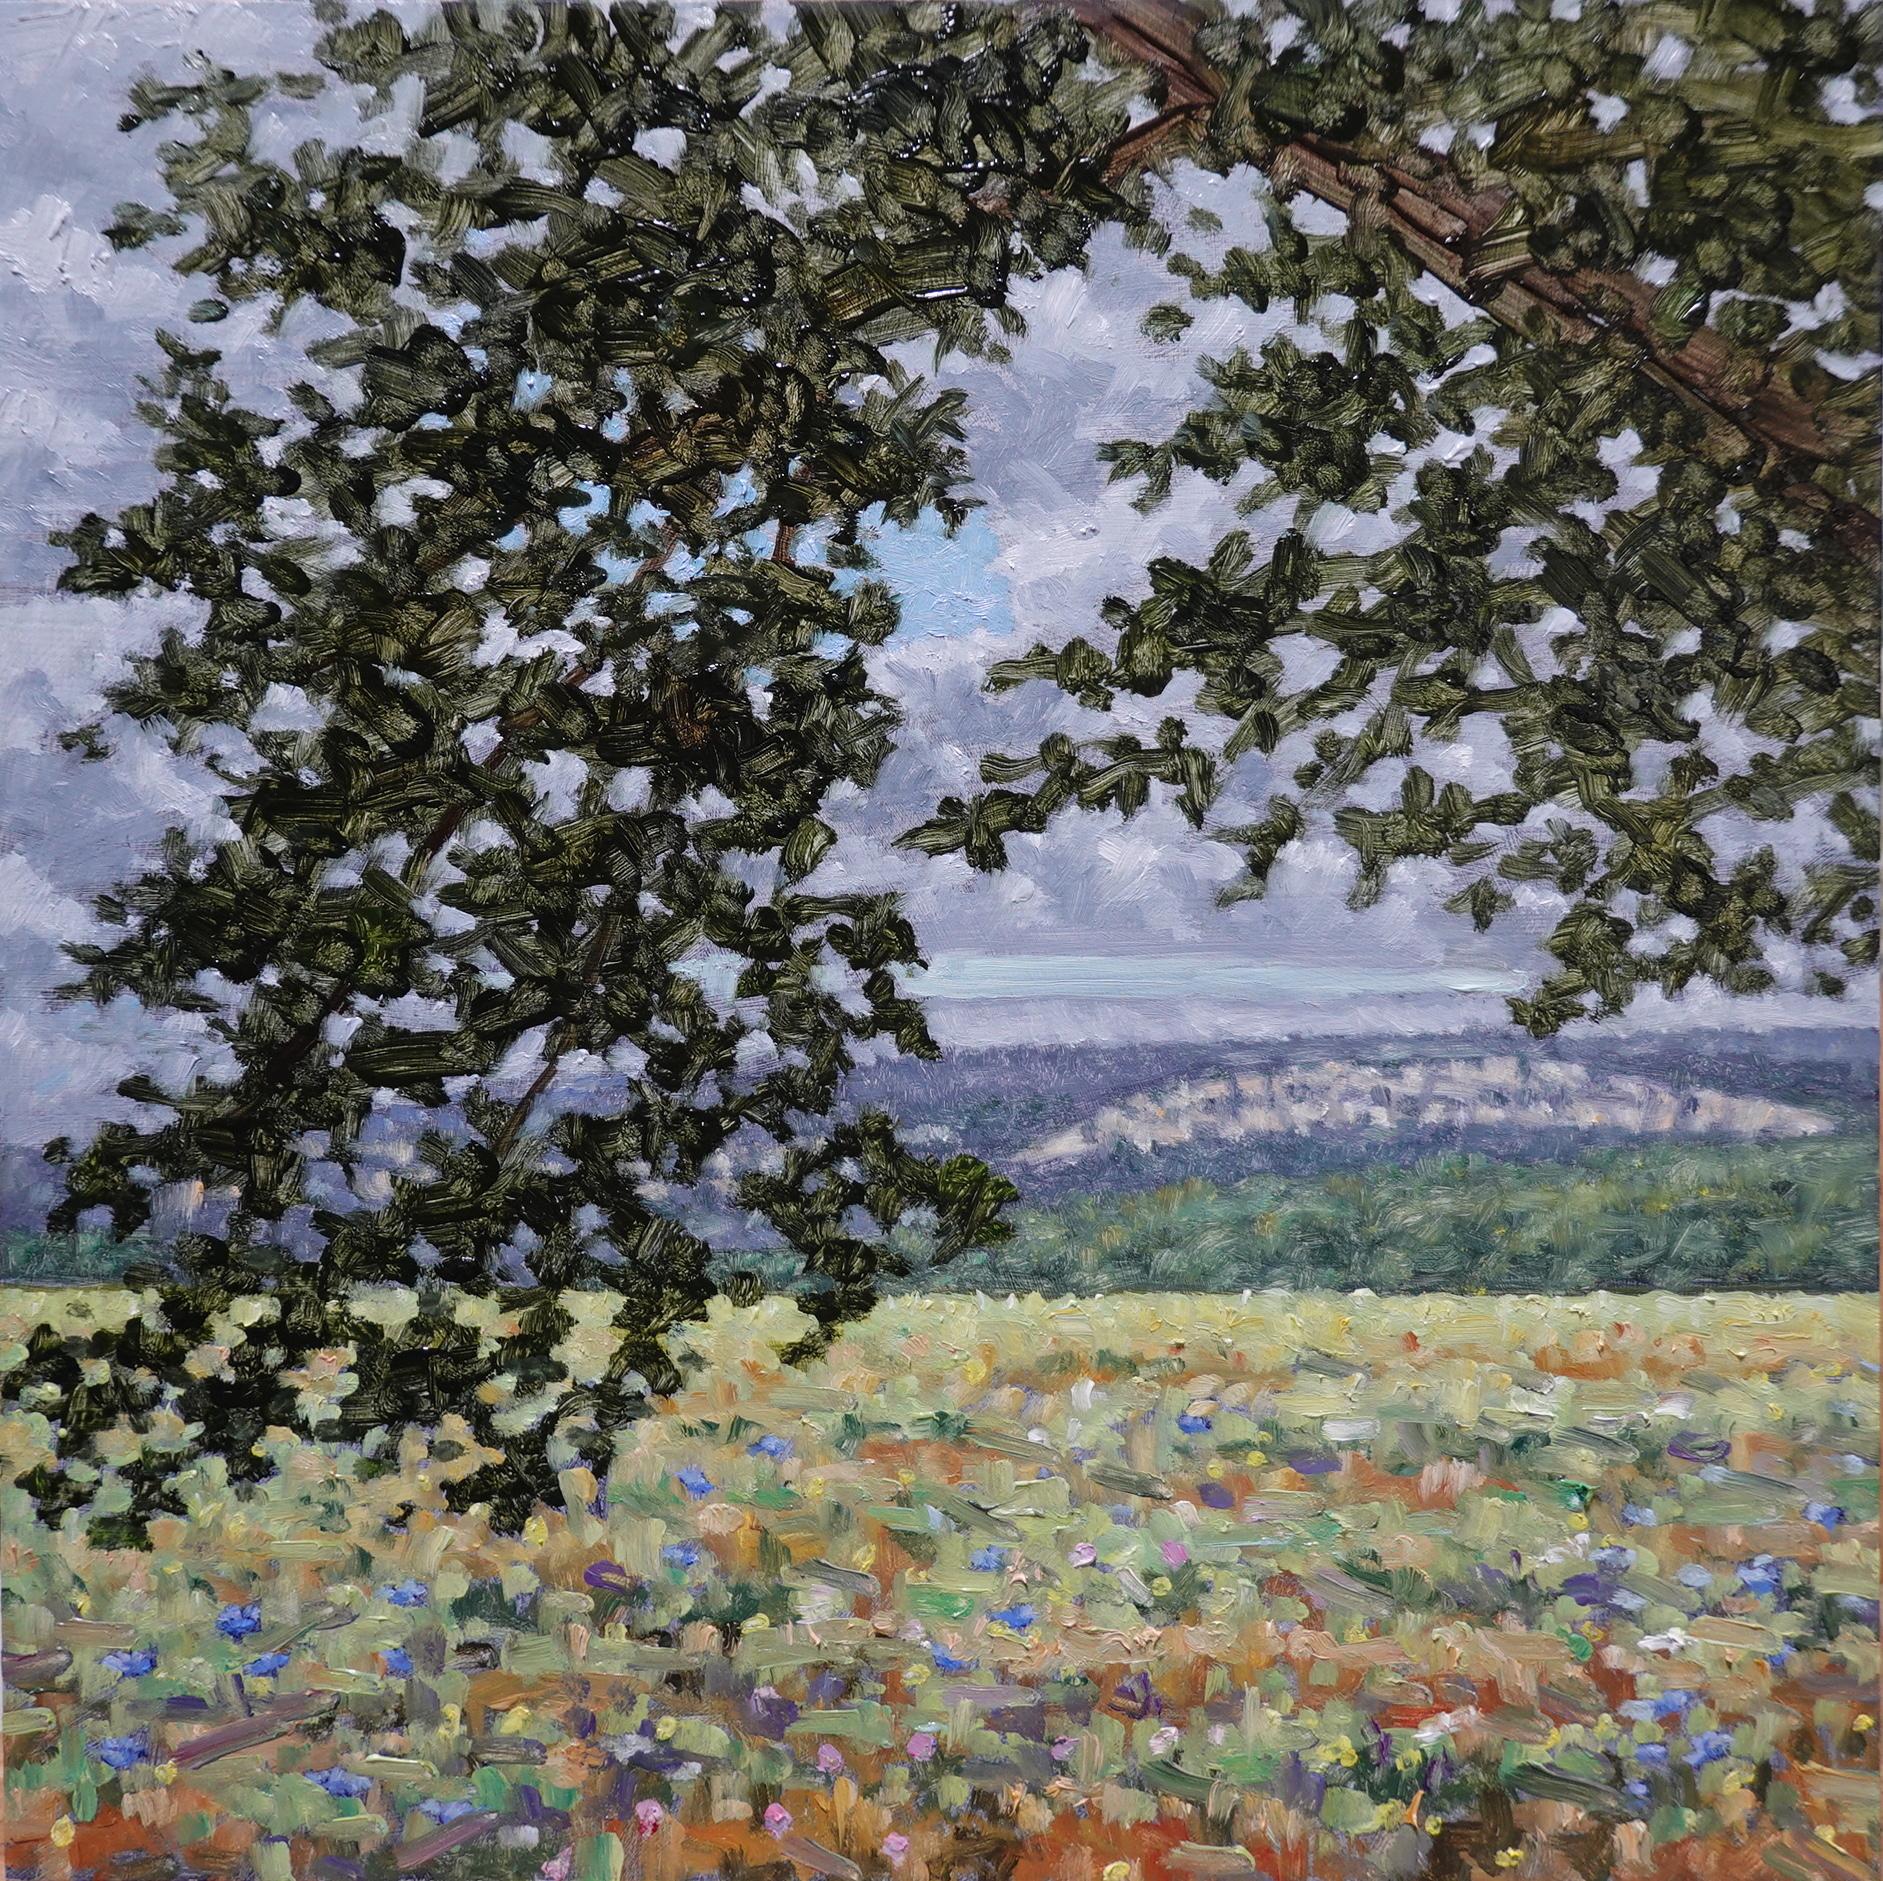 Thomas Sarrantonio Landscape Painting - Field Painting July 19 2022, Green Tree, Grass, Lilac Blue Flowers